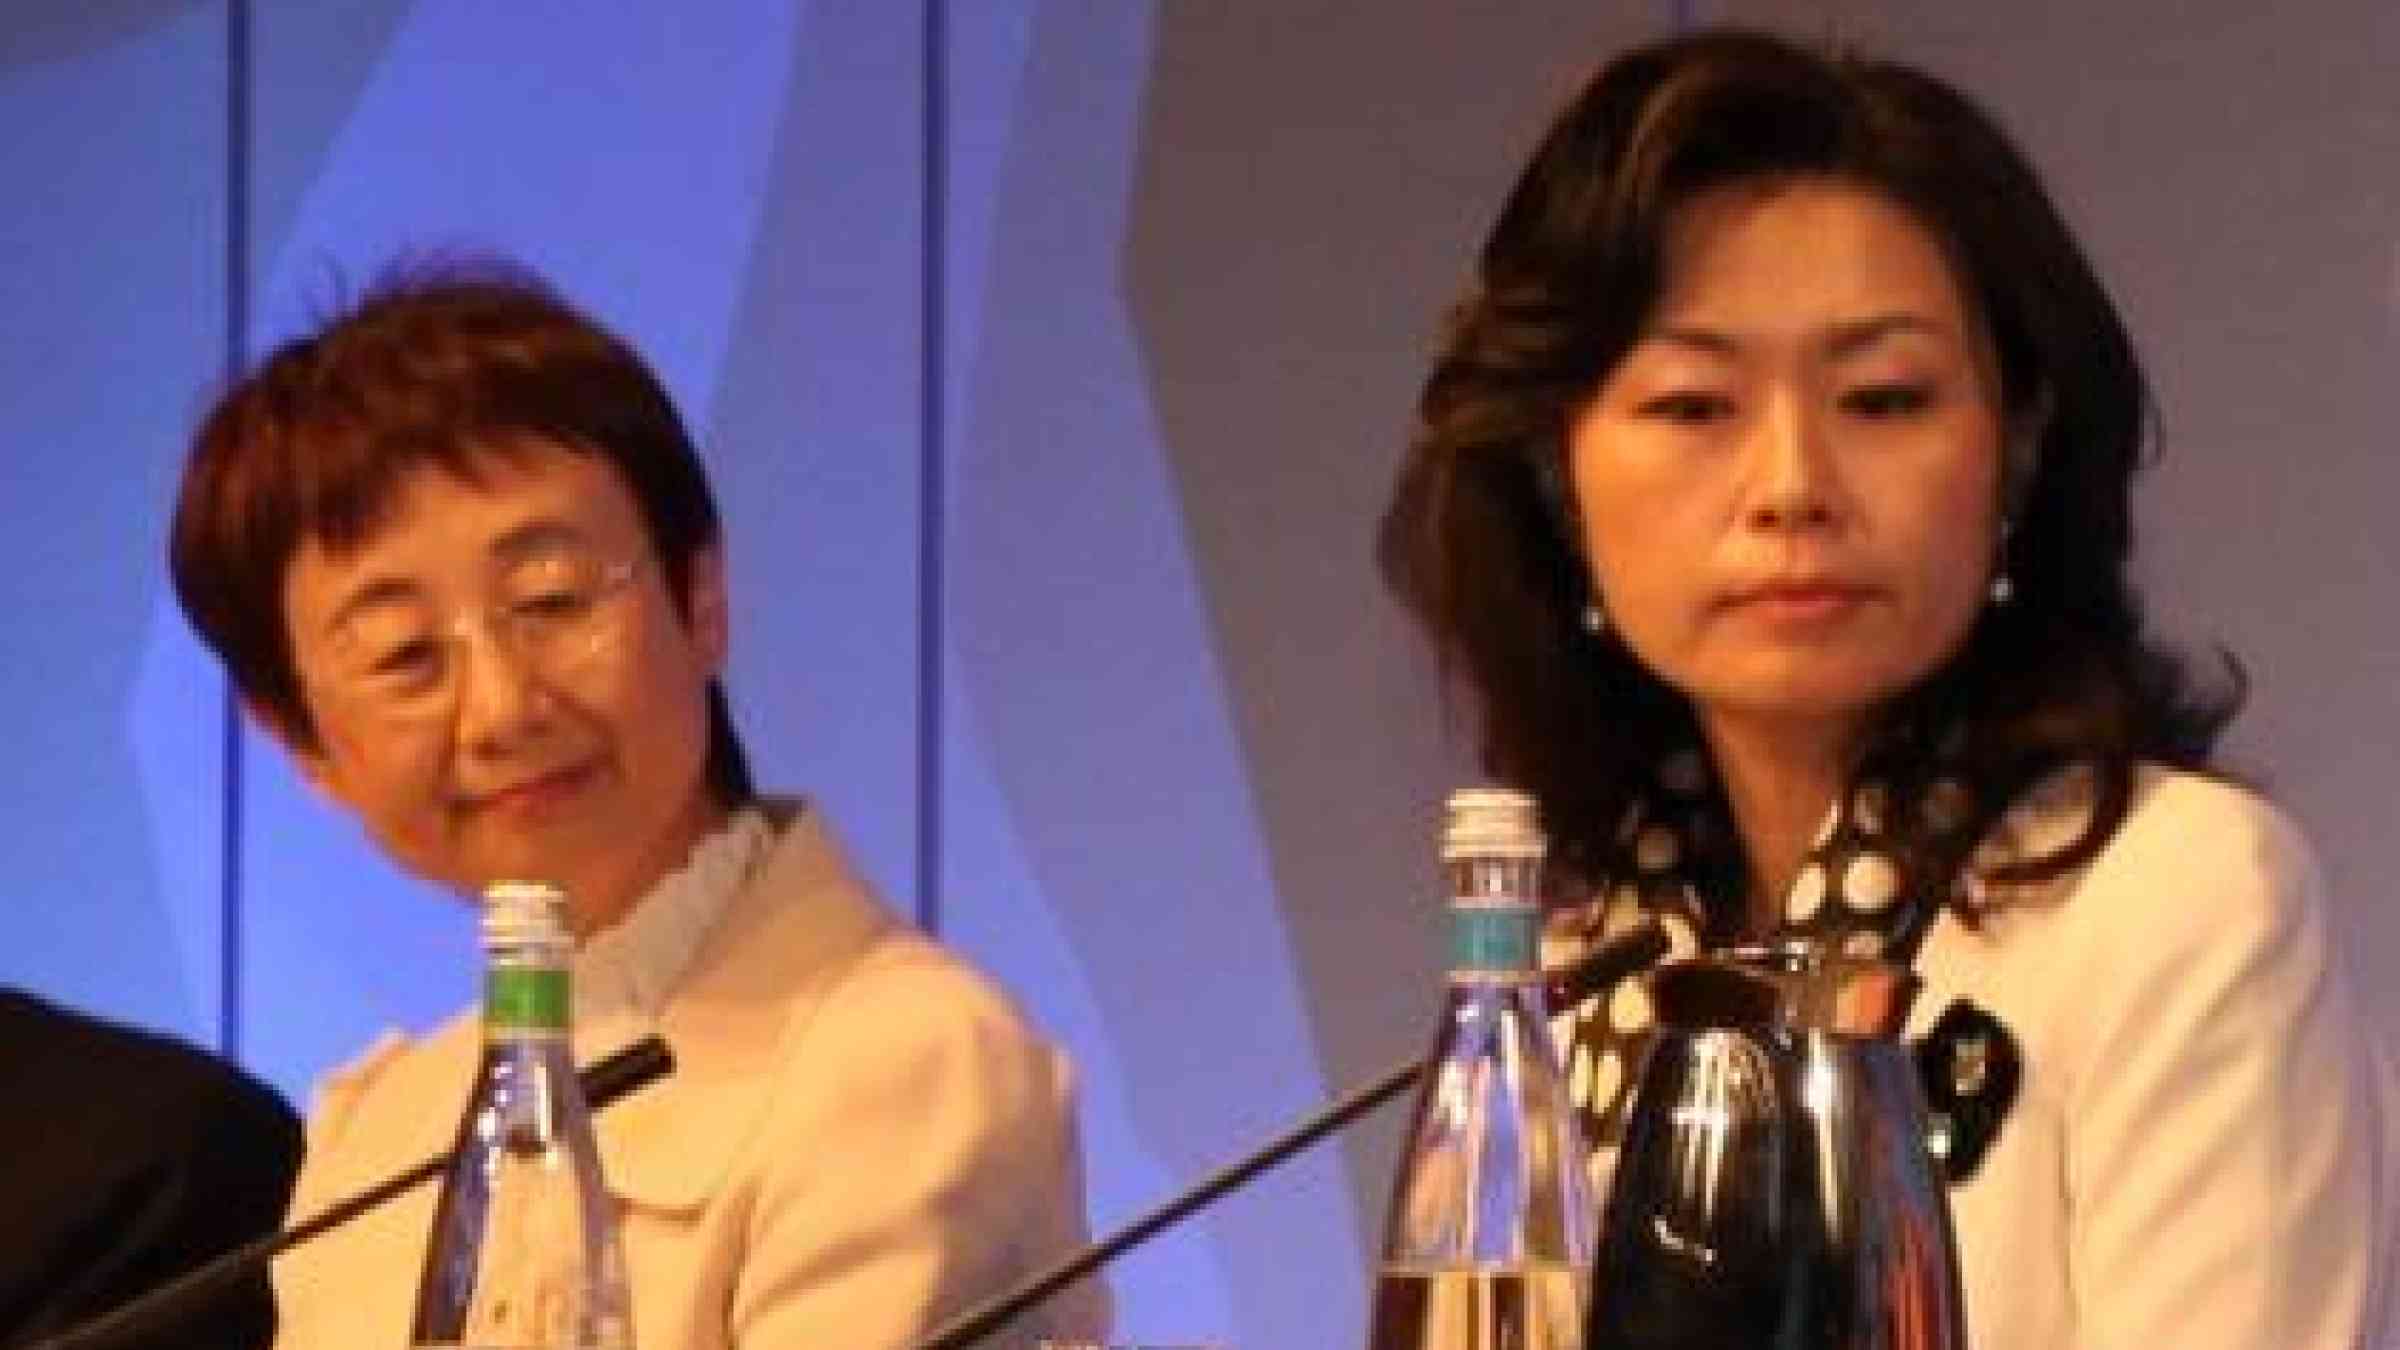 Sendai City Mayor Emiko Okuyama and Kokusai Kogyo's Chairperson and CEO Sandra Wu, Wen-Hsiu during the opening day plenary of the Global Platform.